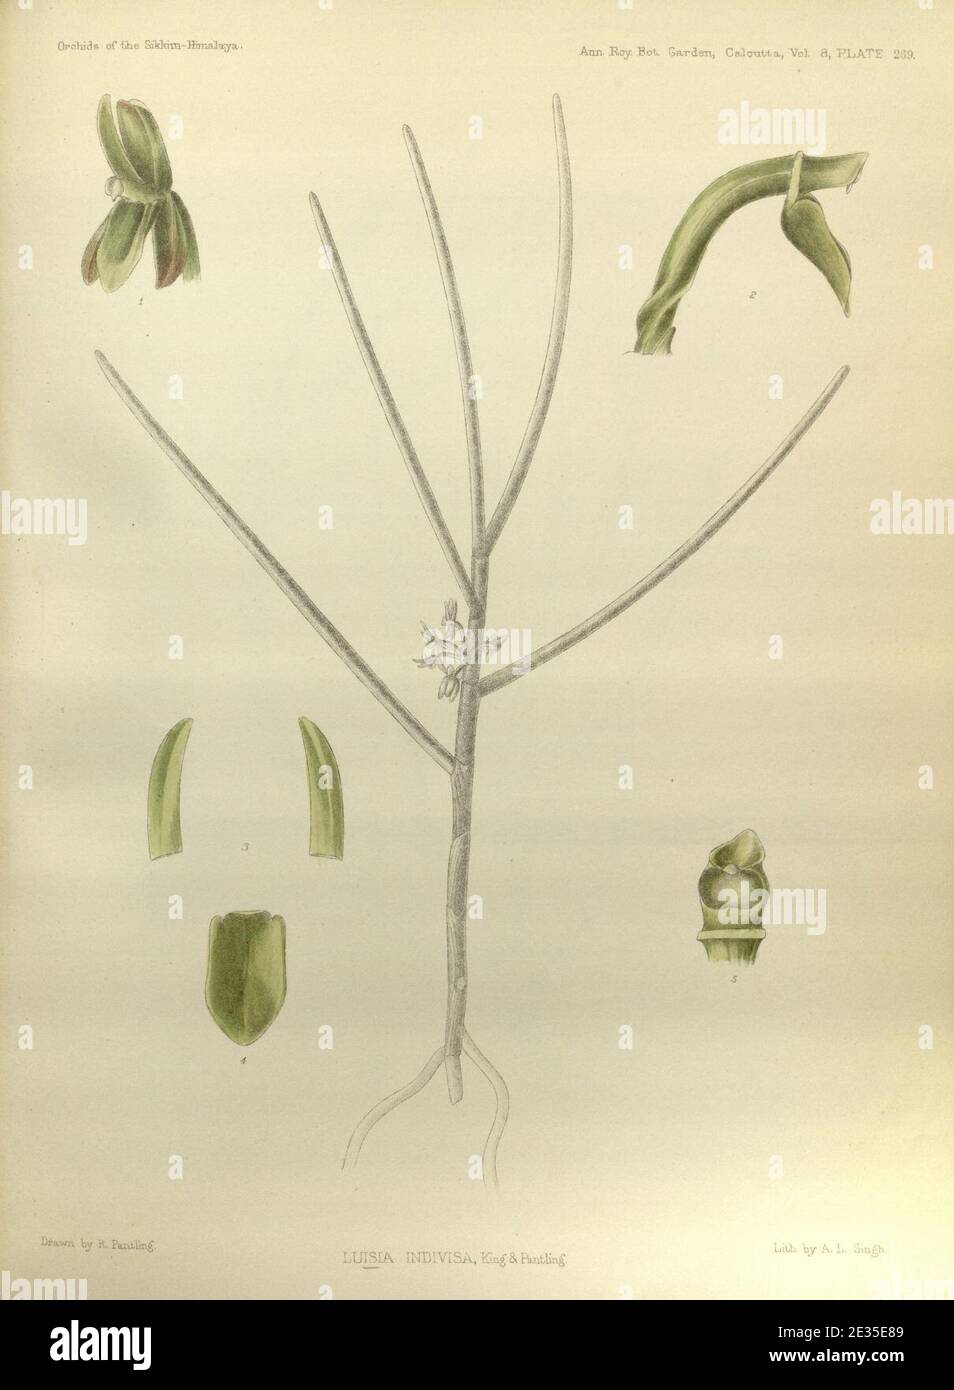 Luisia brachystachys (as Luisia indivisa) - The Orchids of the Sikkim-Himalaya pl 269 (1898). Stock Photo